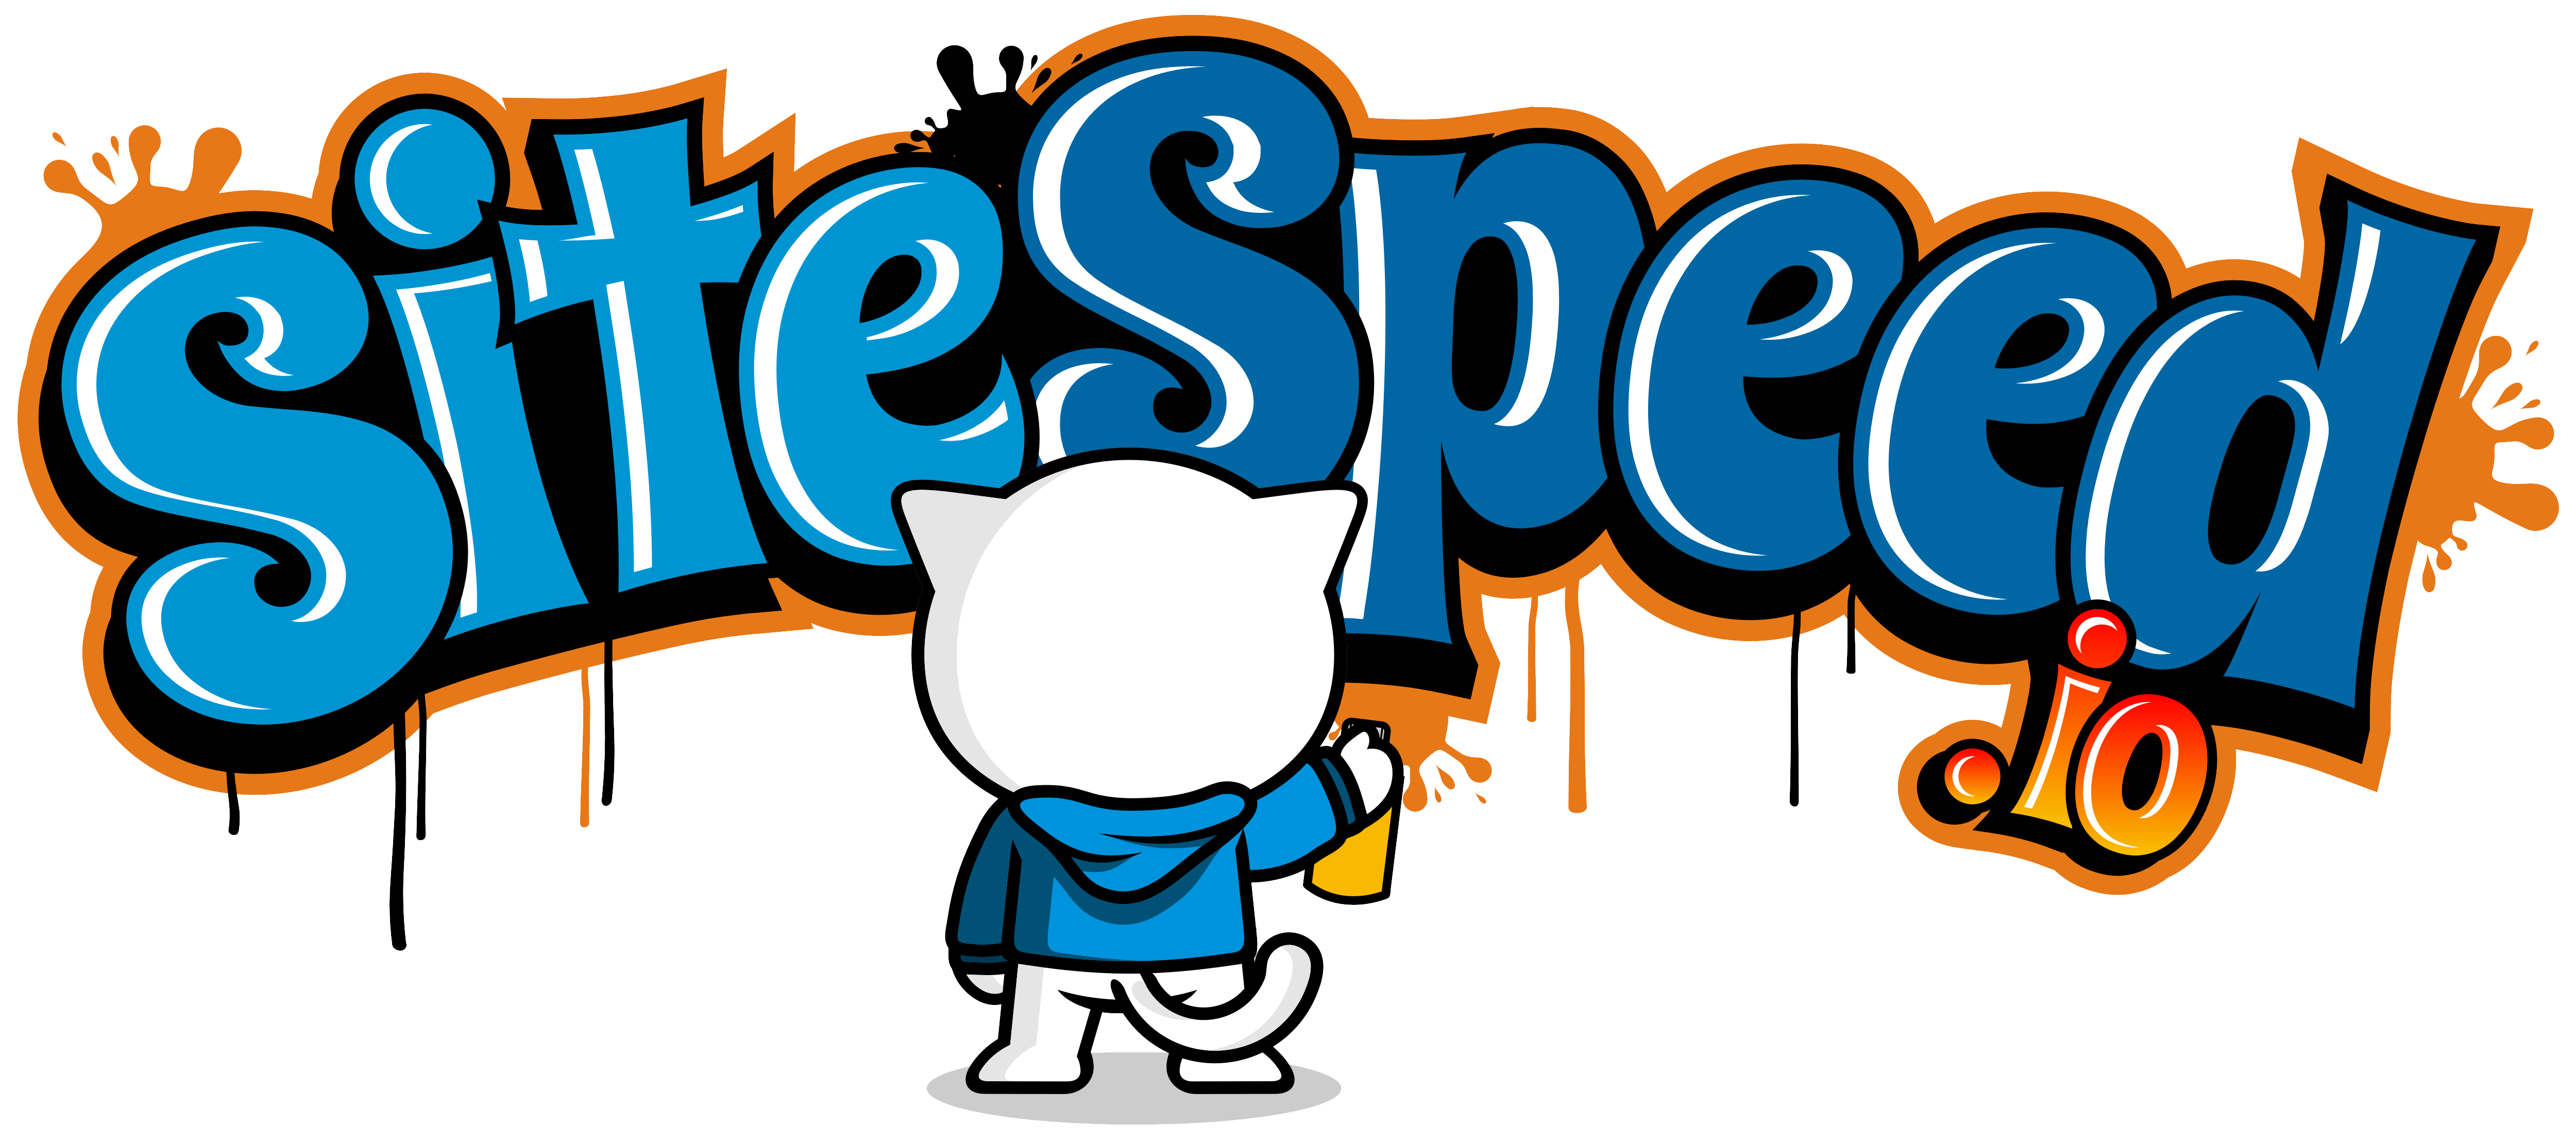 sitespeed.io logo